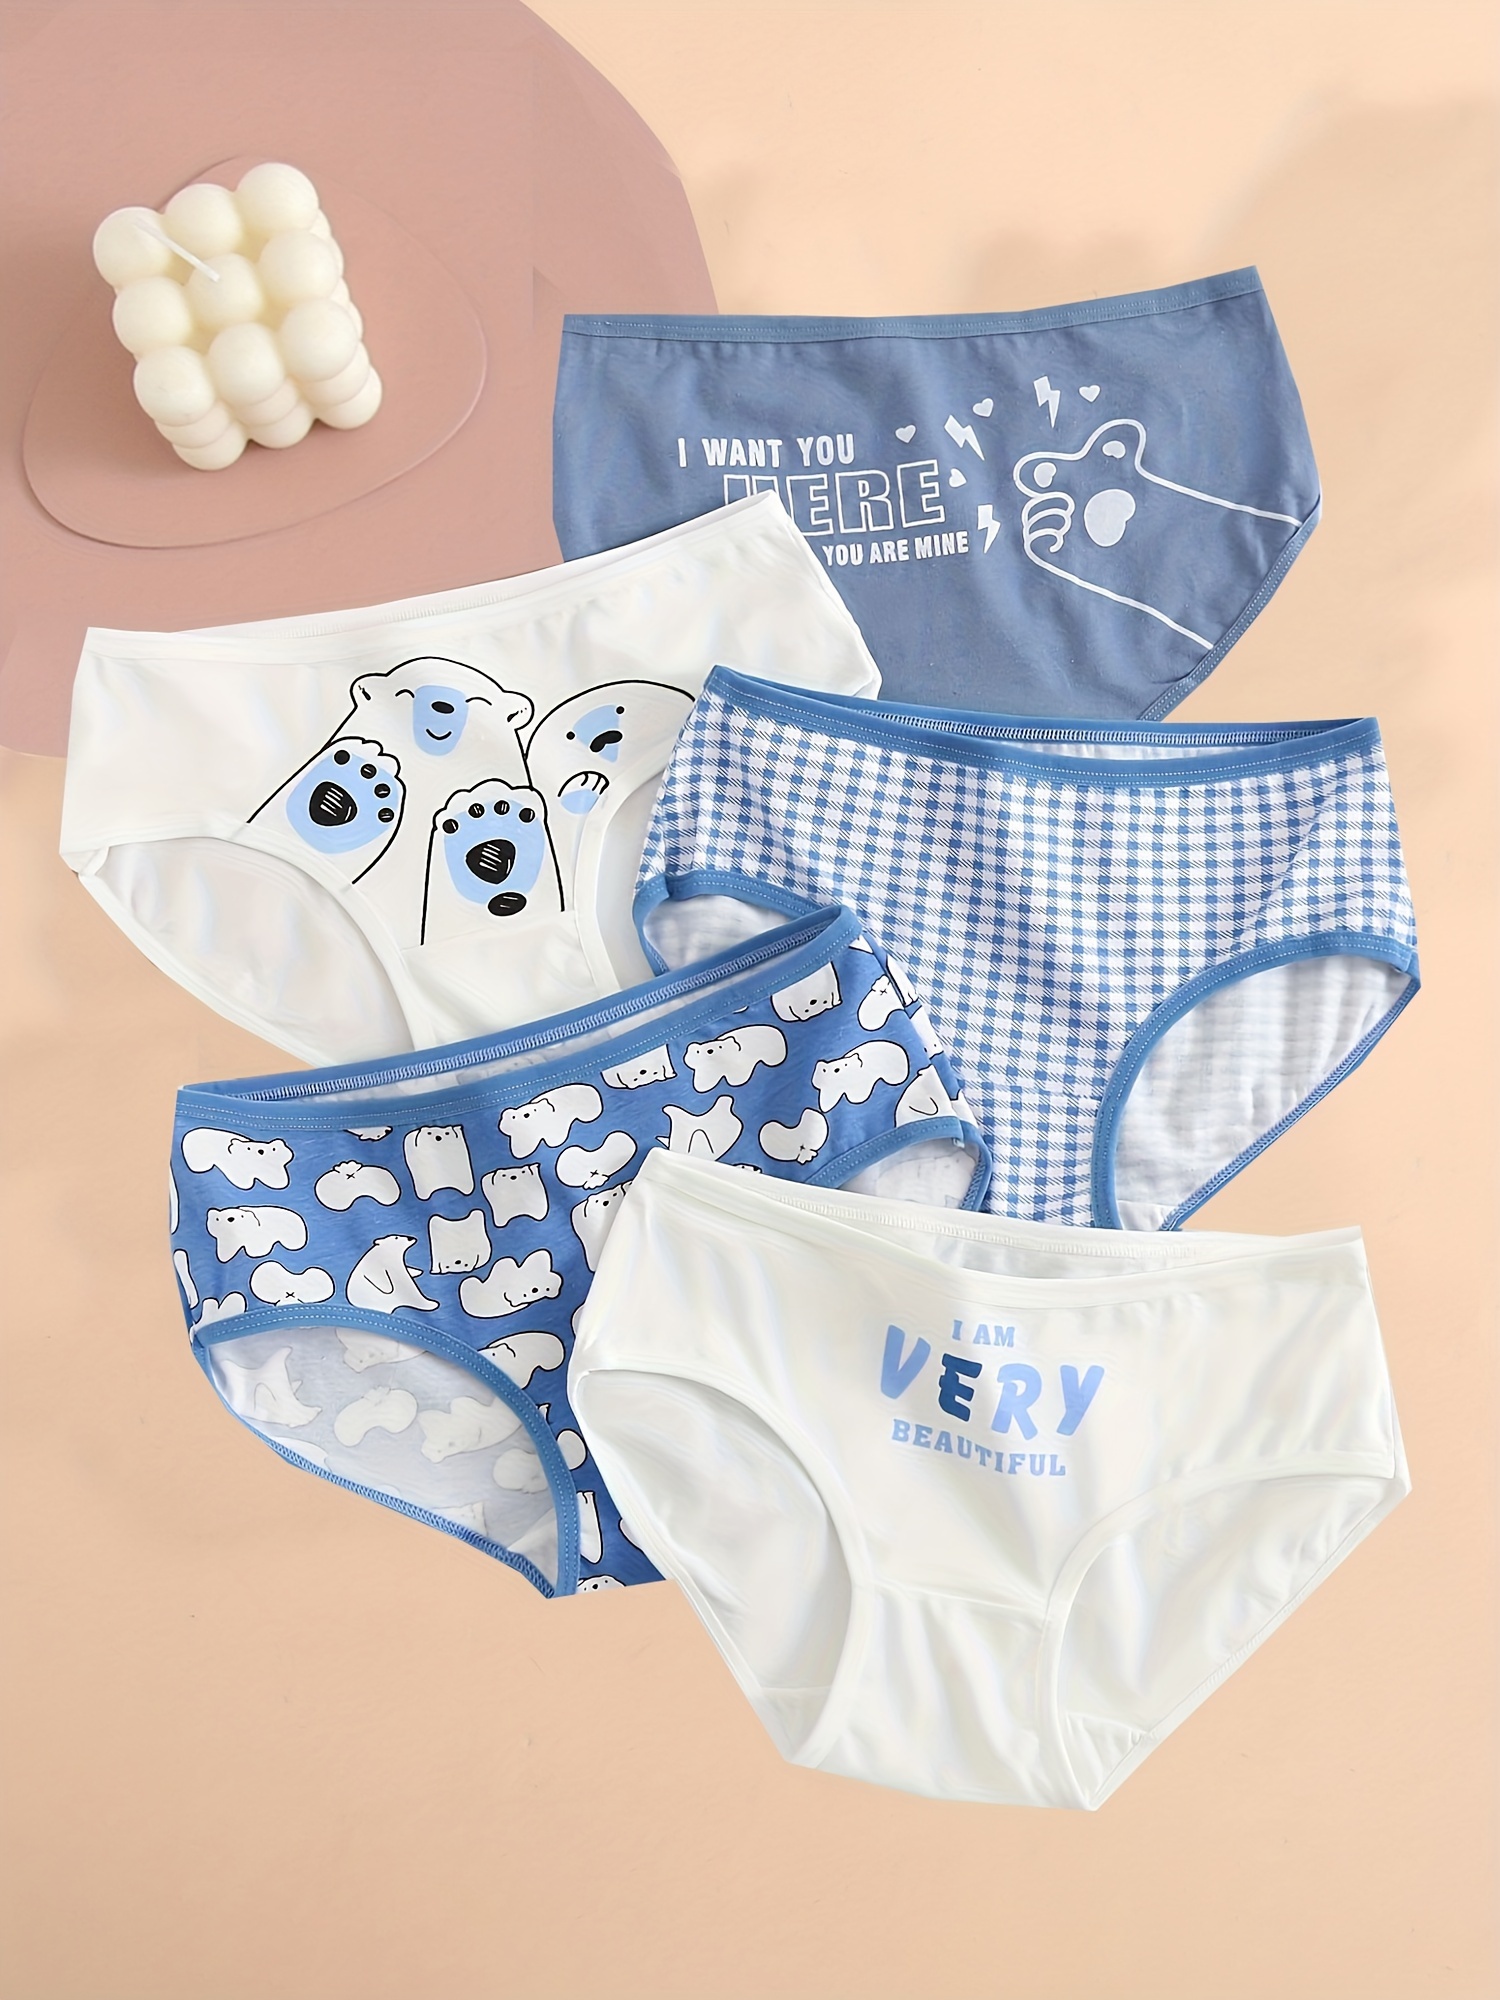 6 Pack Cute & Comfy Cotton Panties, Breathable Sporty Soft Panties, Women's  Lingerie & Underwear